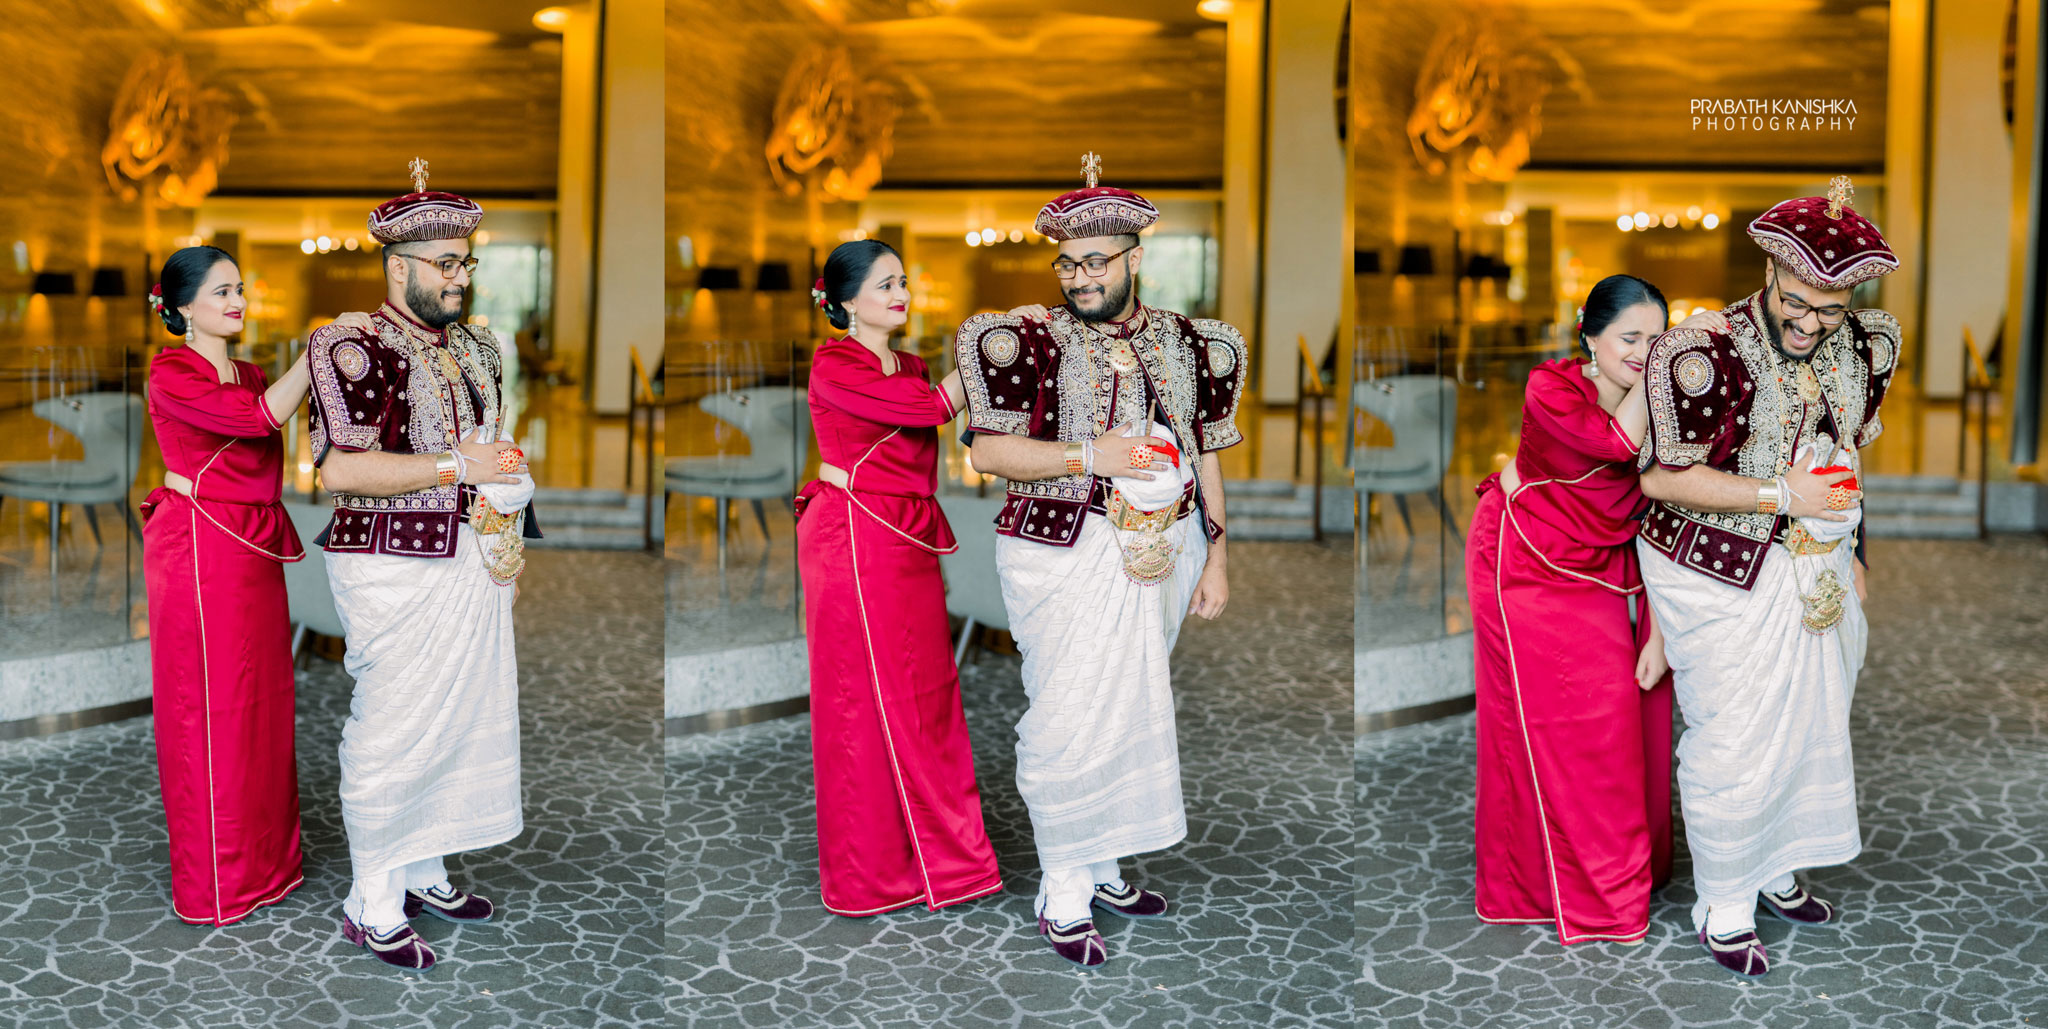 Sandali & Lahiru - Prabath Kanishka Wedding Photography